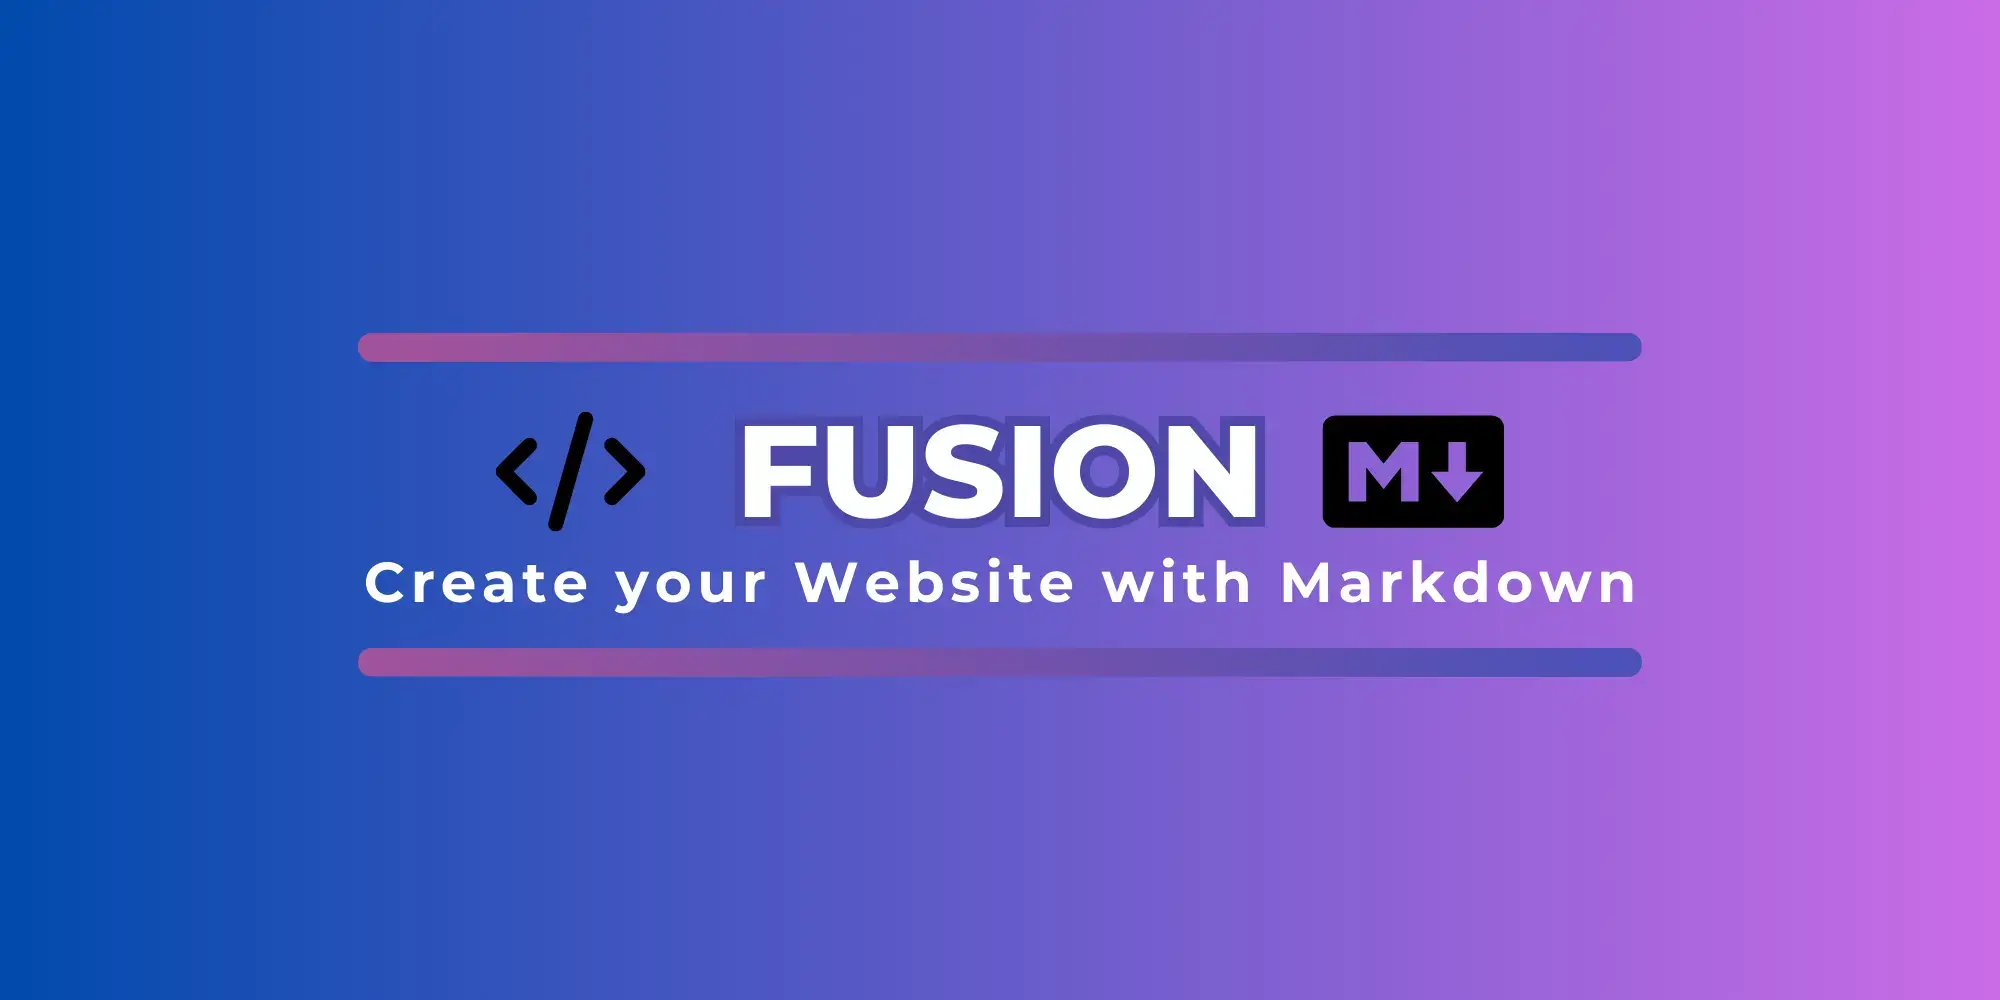 Fusion integrates Markdown into Laravel Models, simplifying Website development.